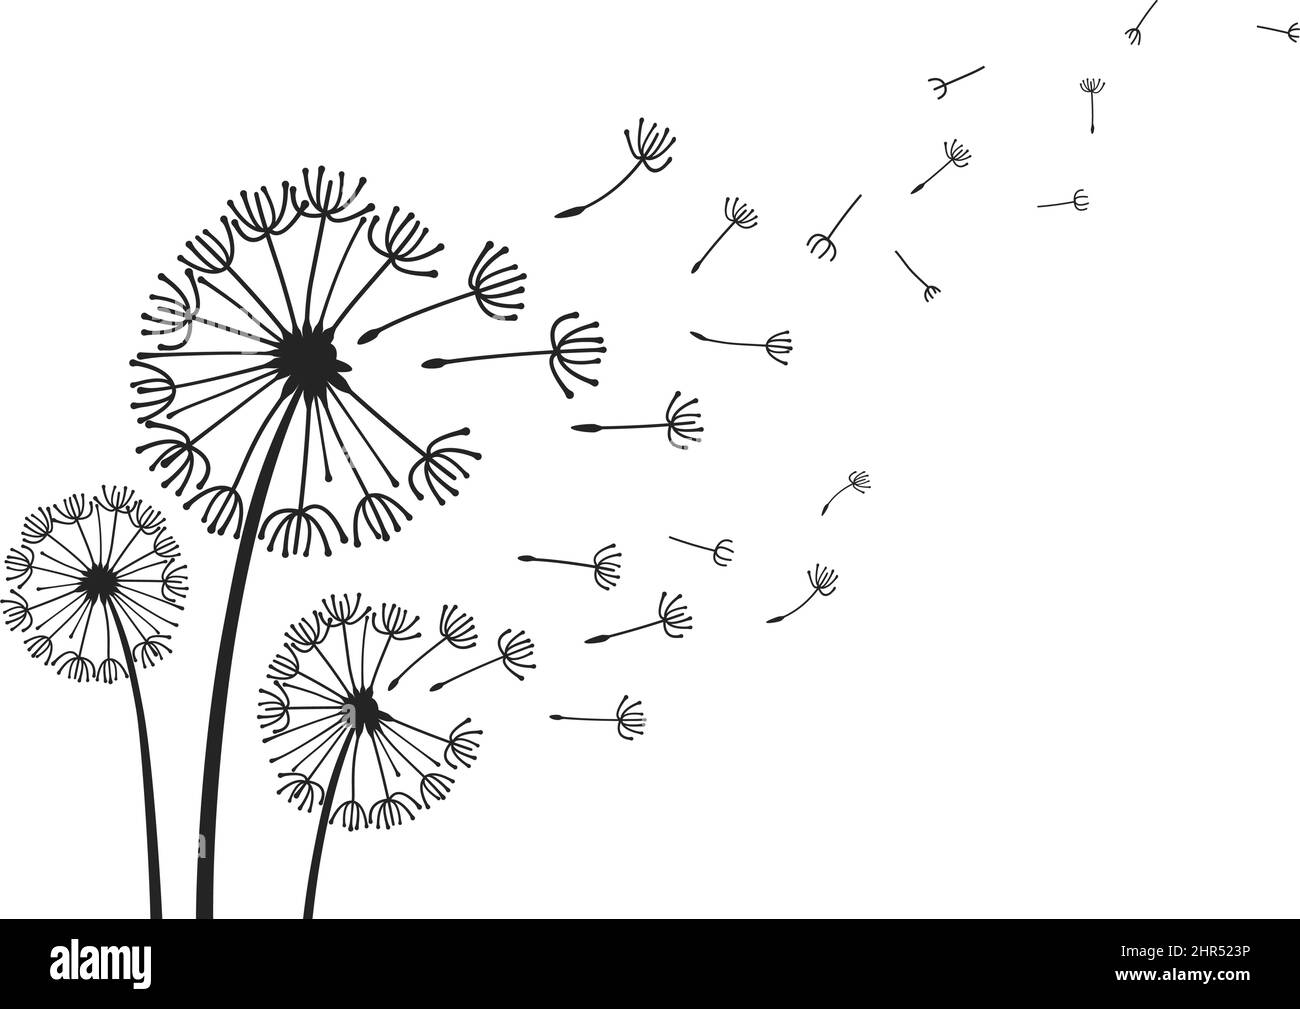 Dandelions with flying seeds, fluffy dandelion flower silhouettes. Spring season blooming blowball flowers doodles vector illustration. Dandelion fluf Stock Vector